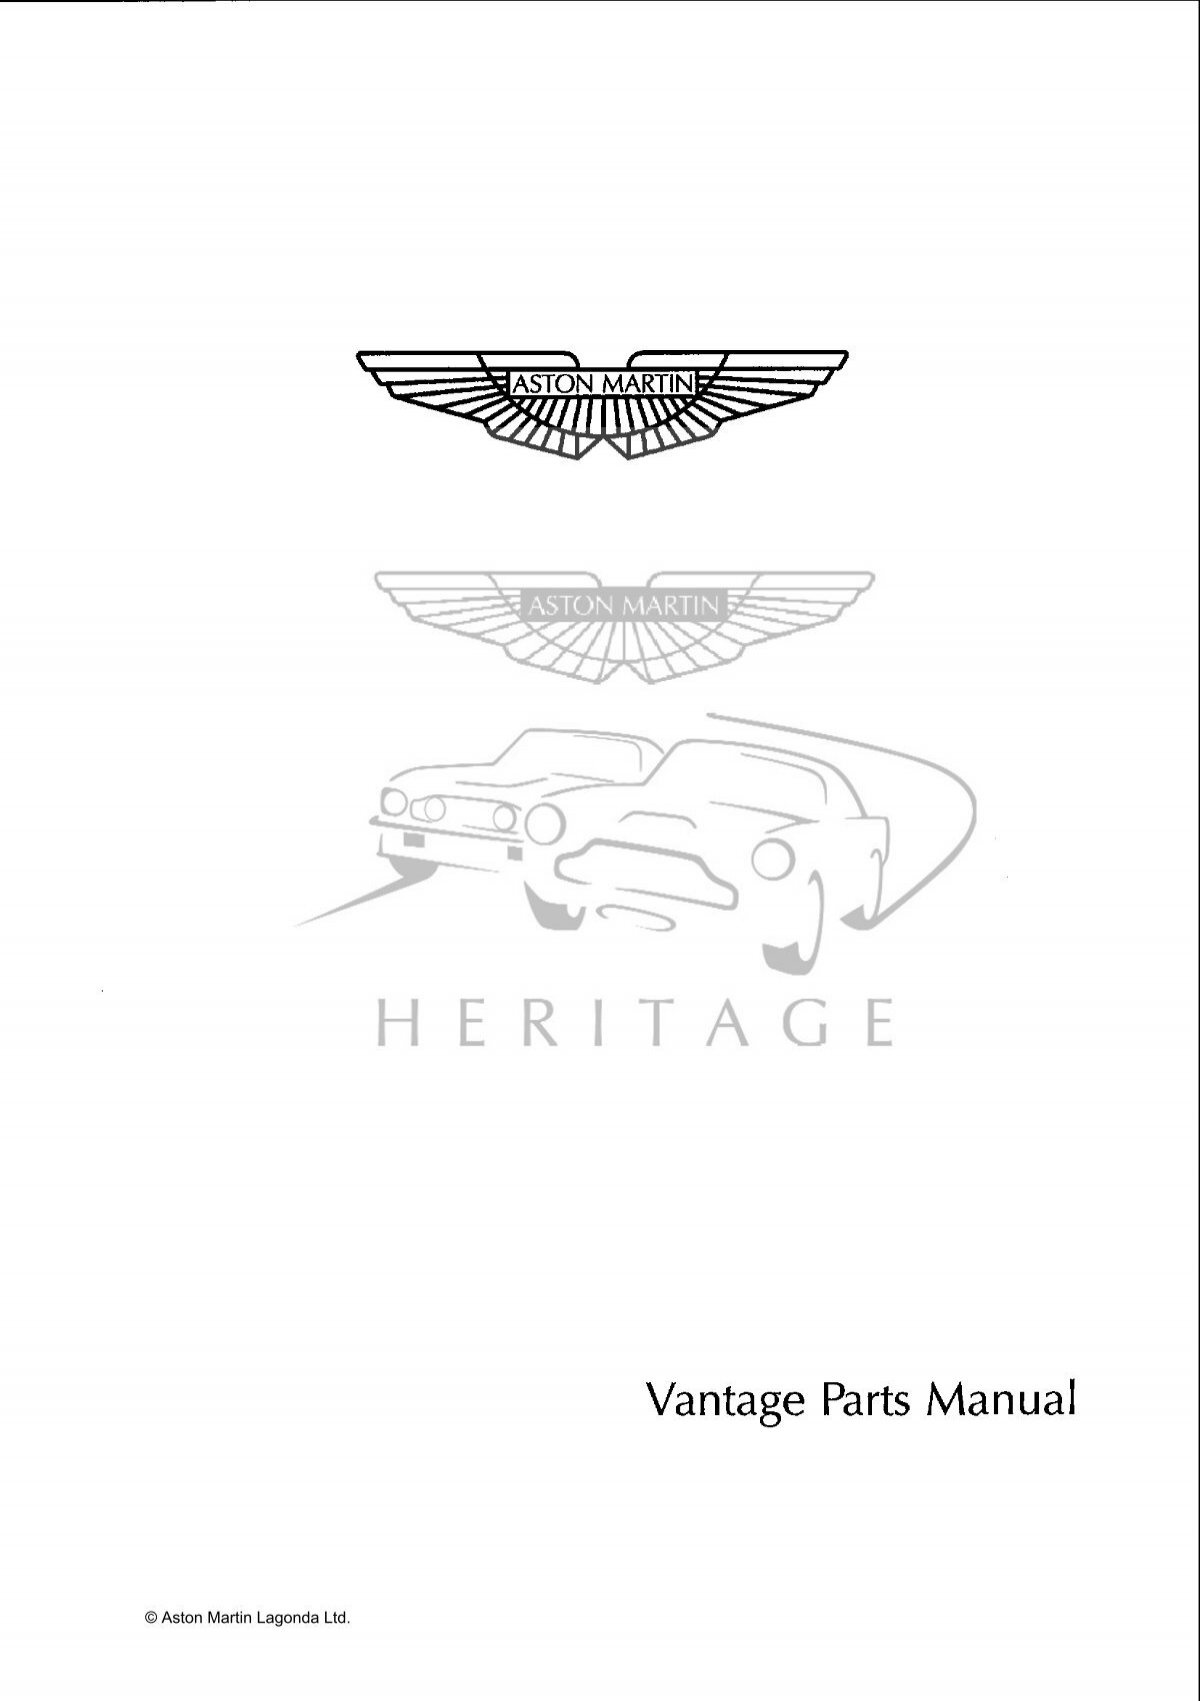 Vantage Parts Manual